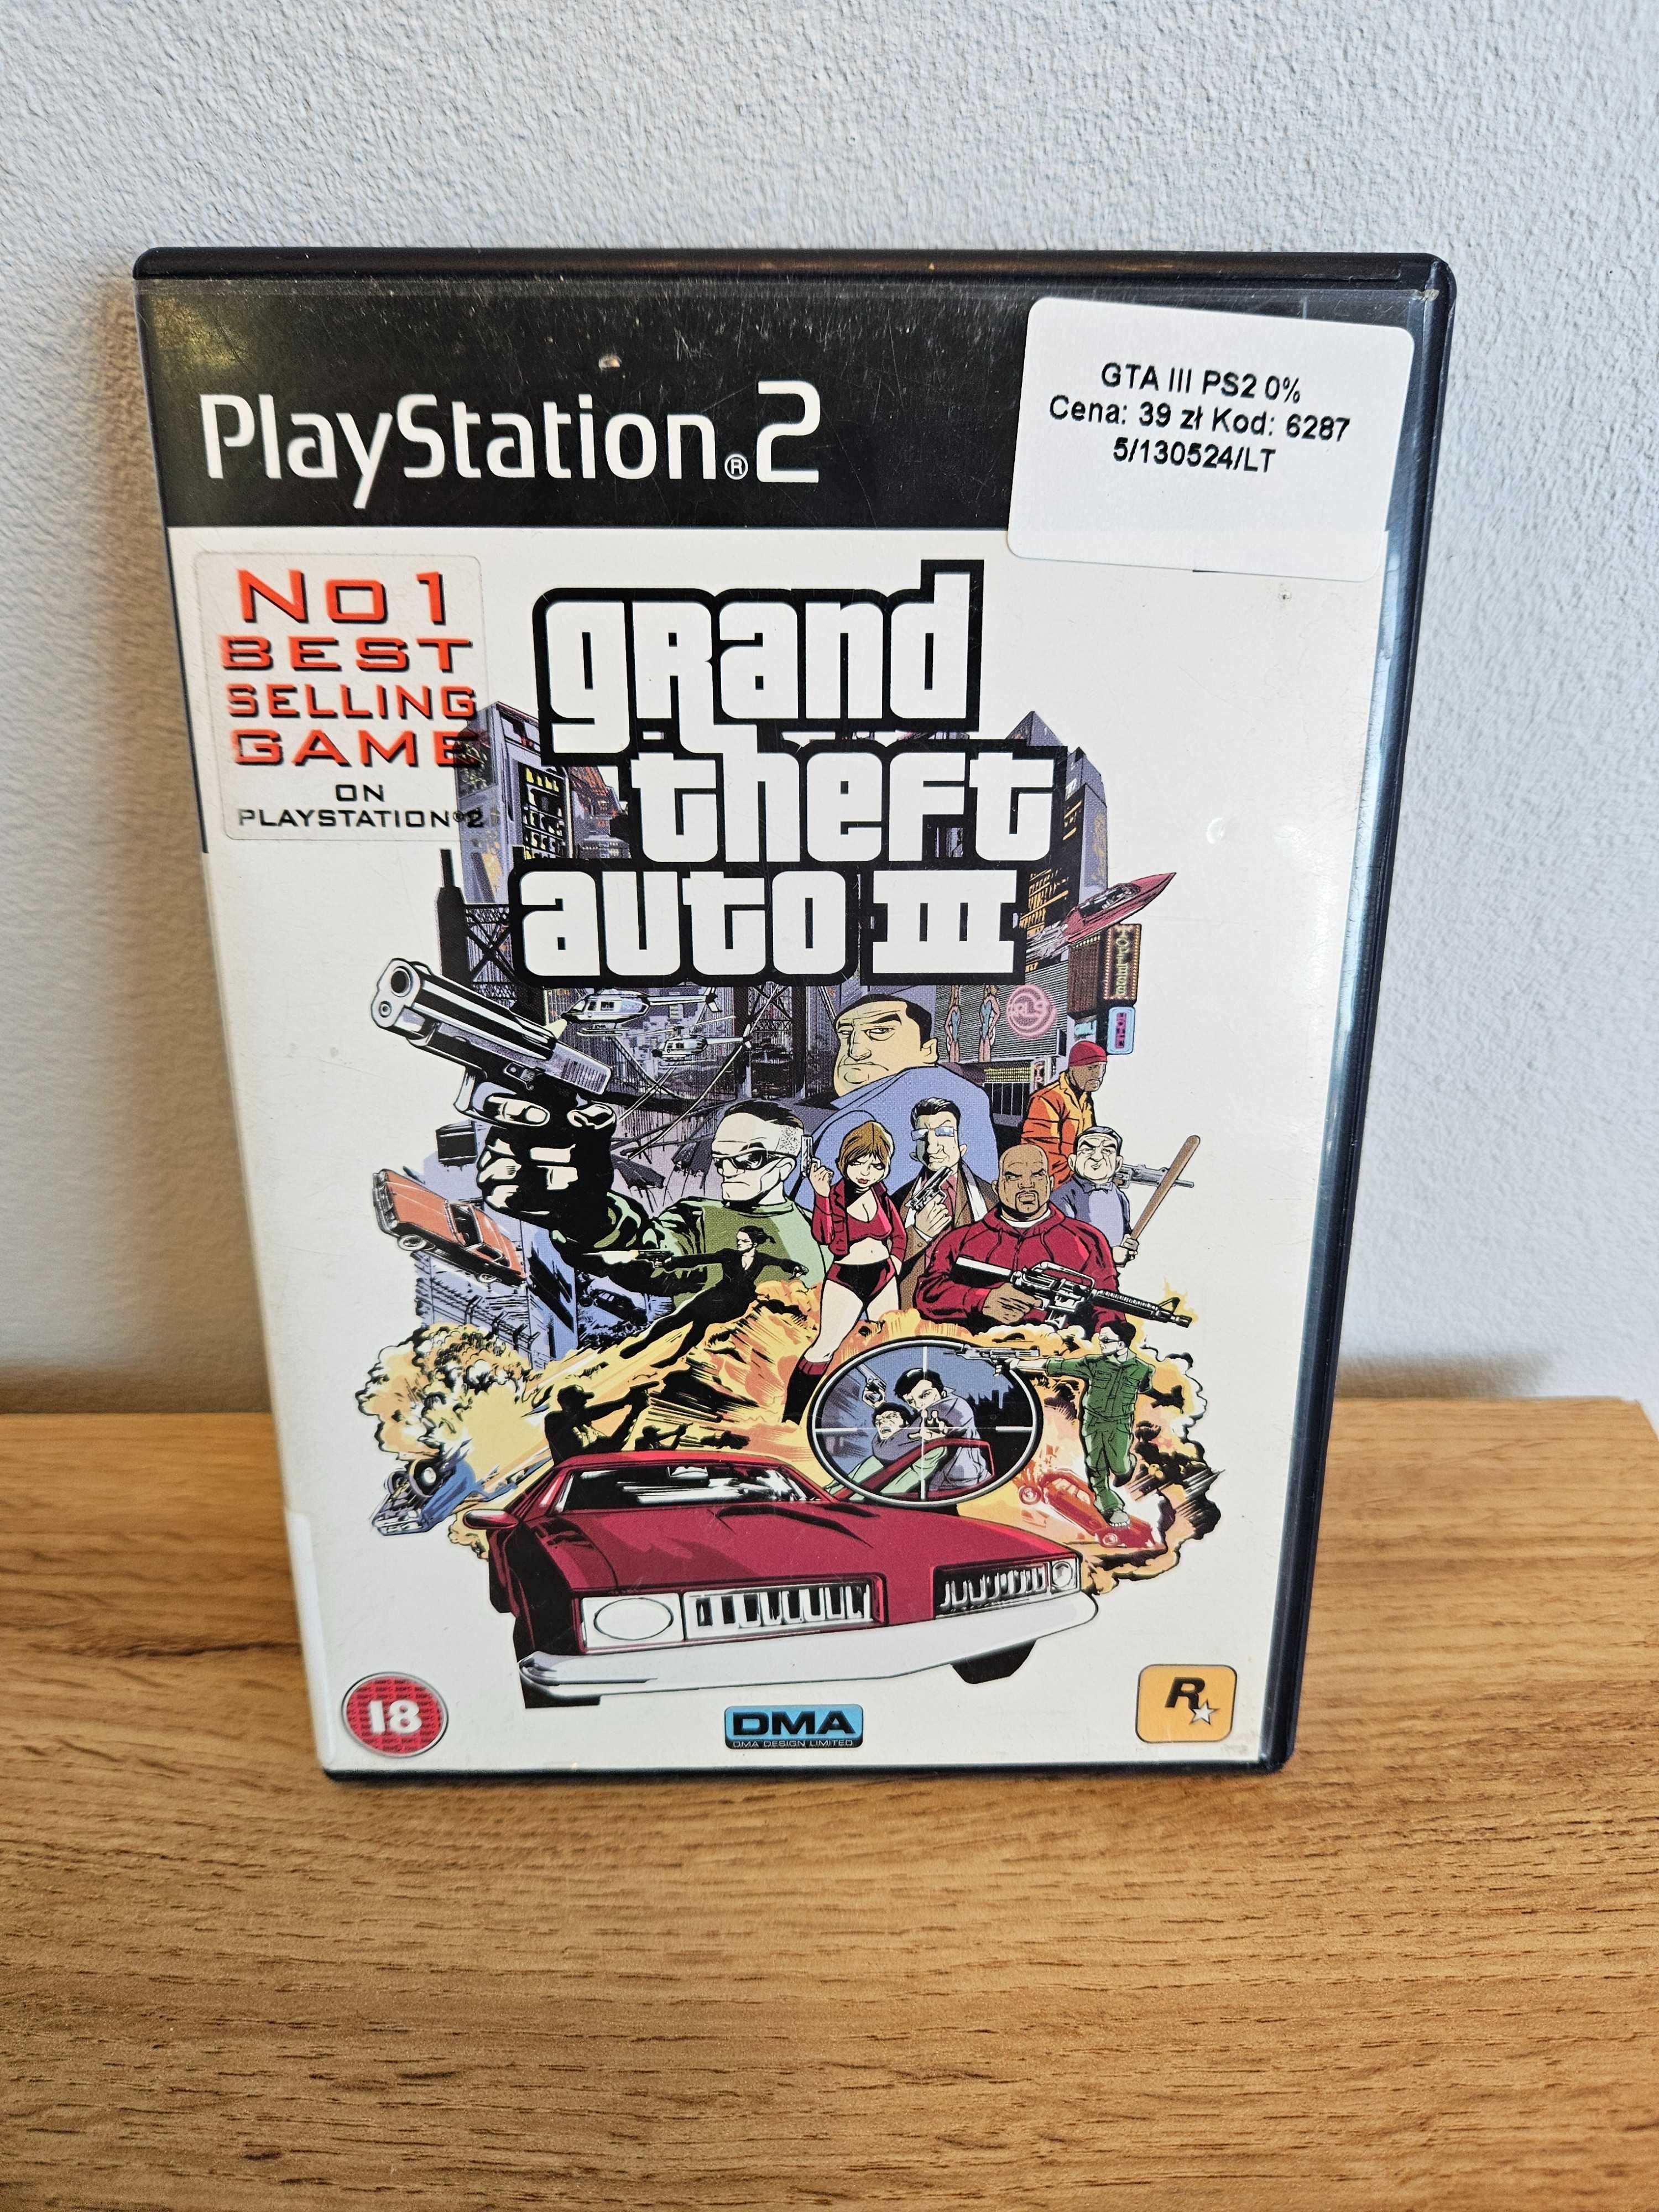 GTA III PlayStation 2 As Game & GSM 6287